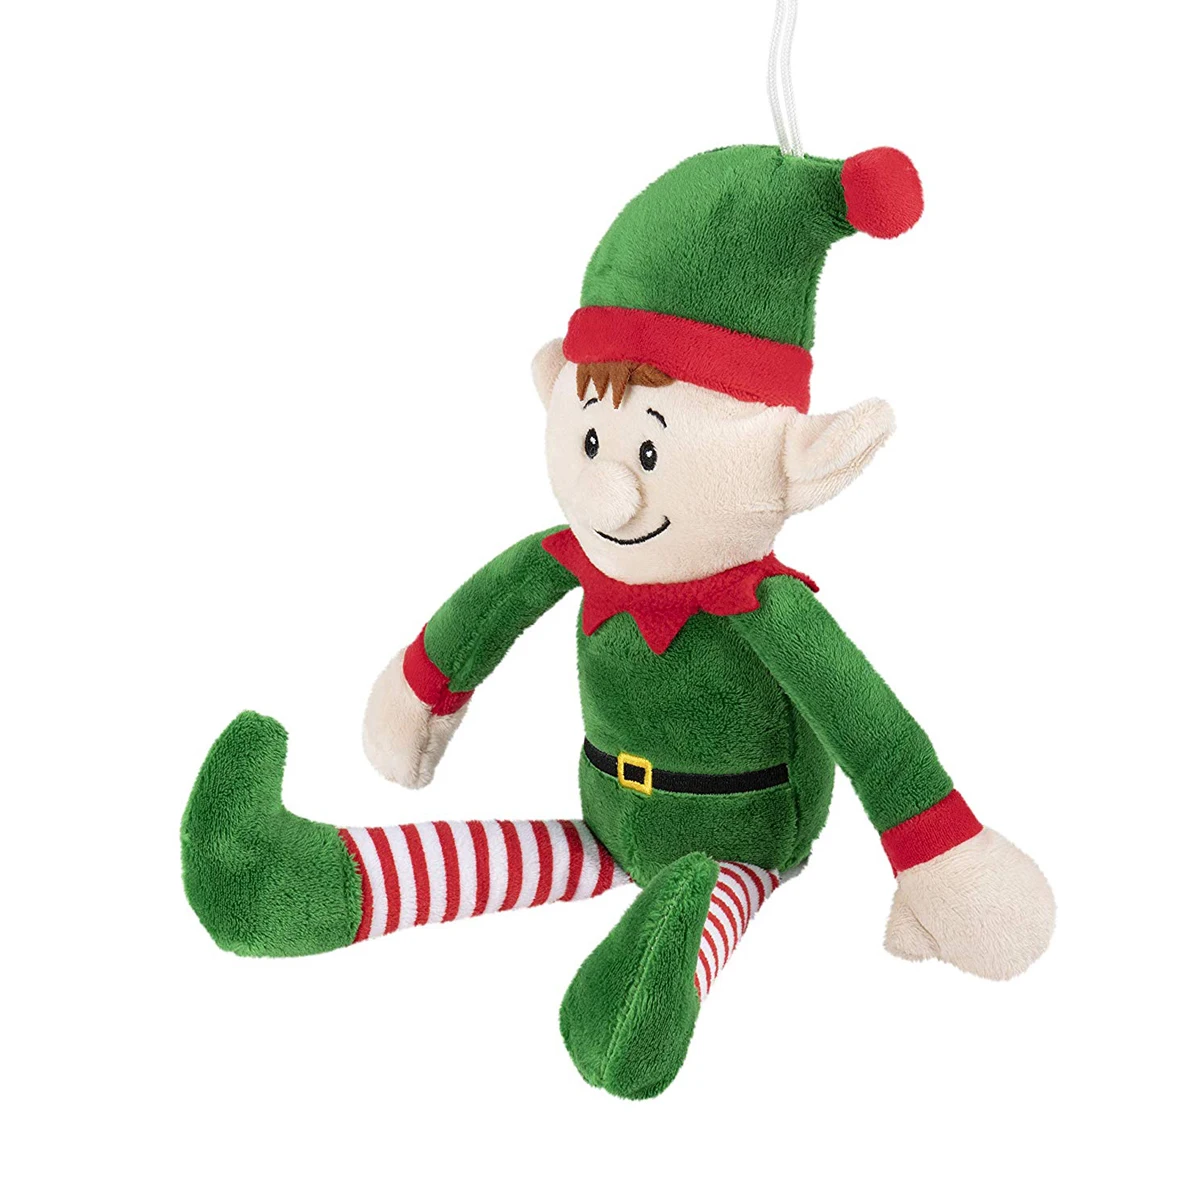 China Wholesale Factory Price Doll Toys Christmas Plush Elf - Buy ...